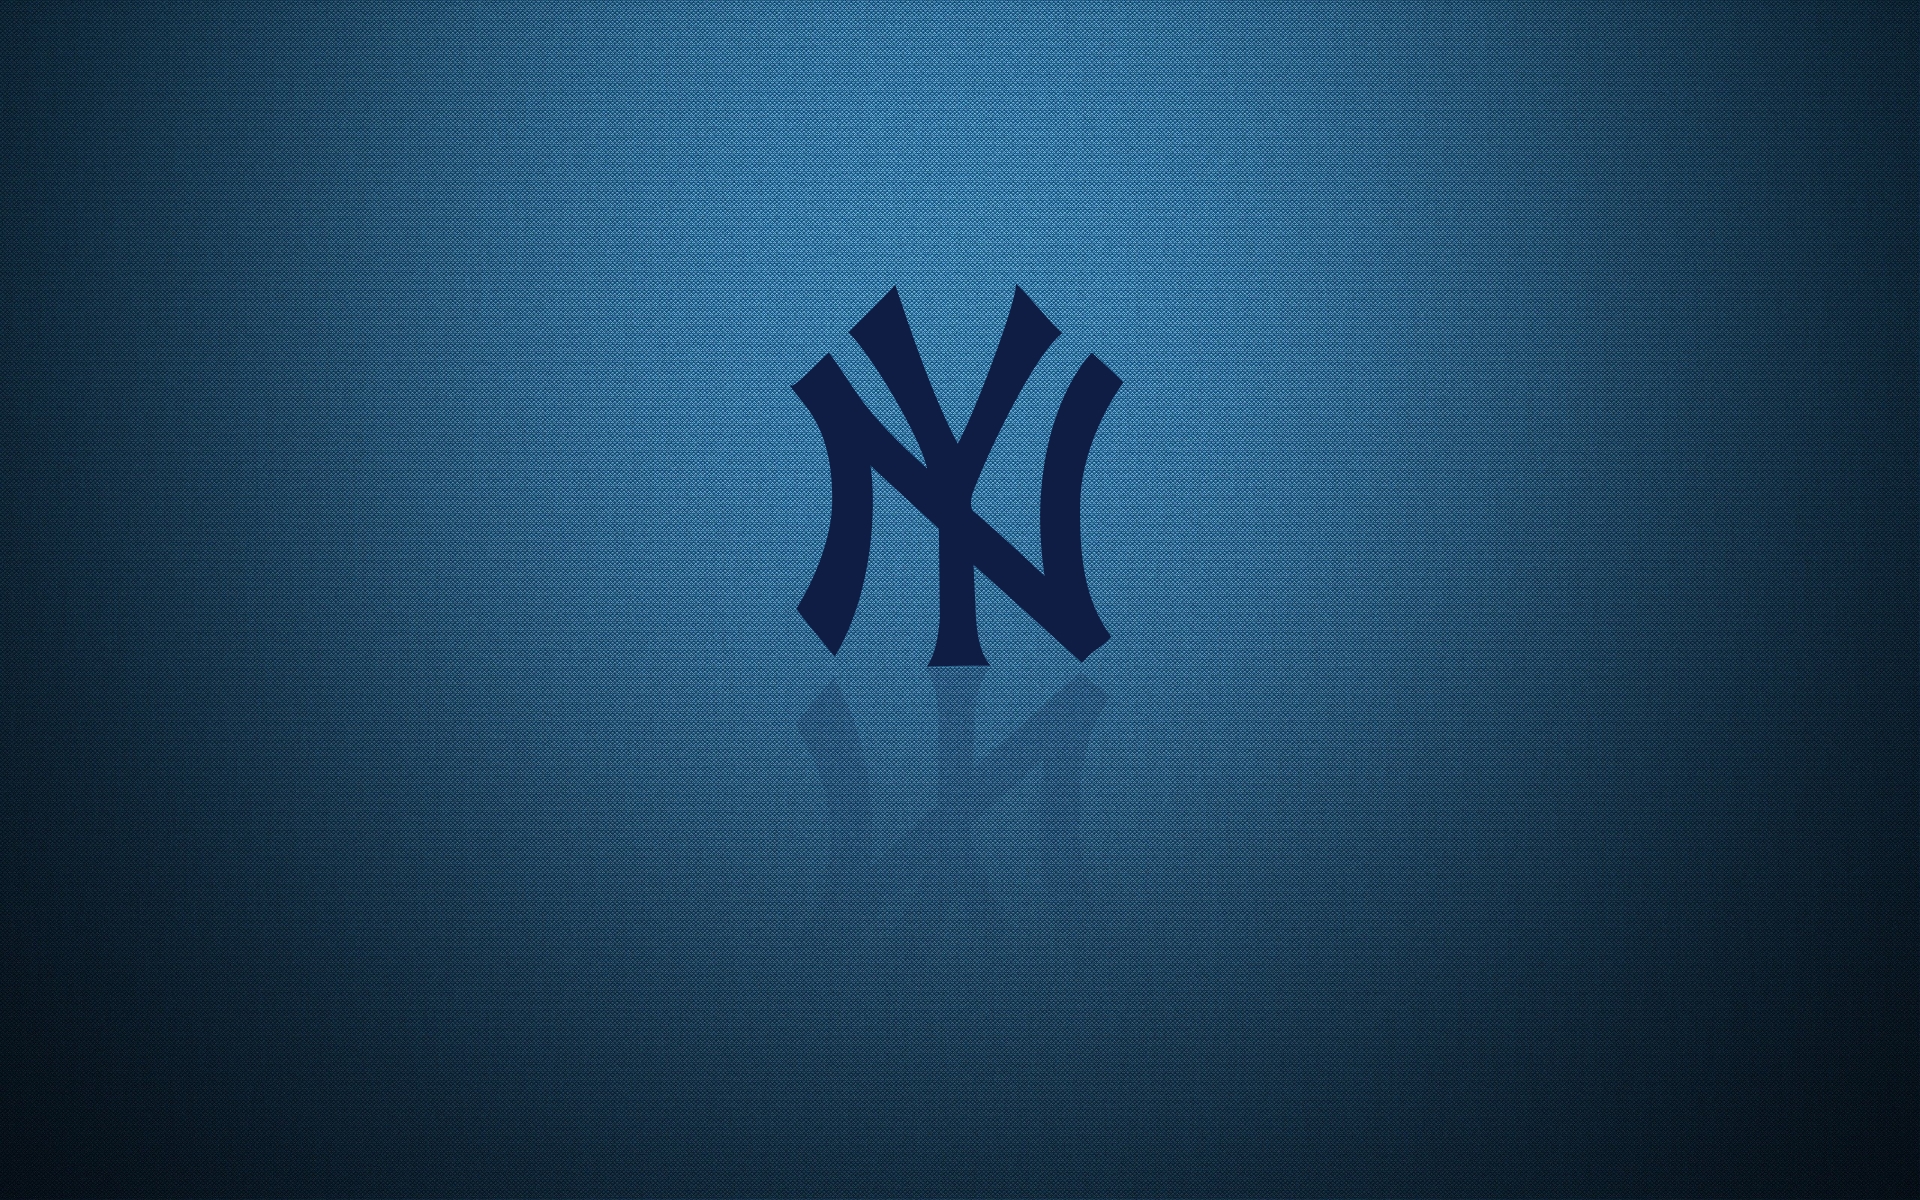 New York Yankees Logos